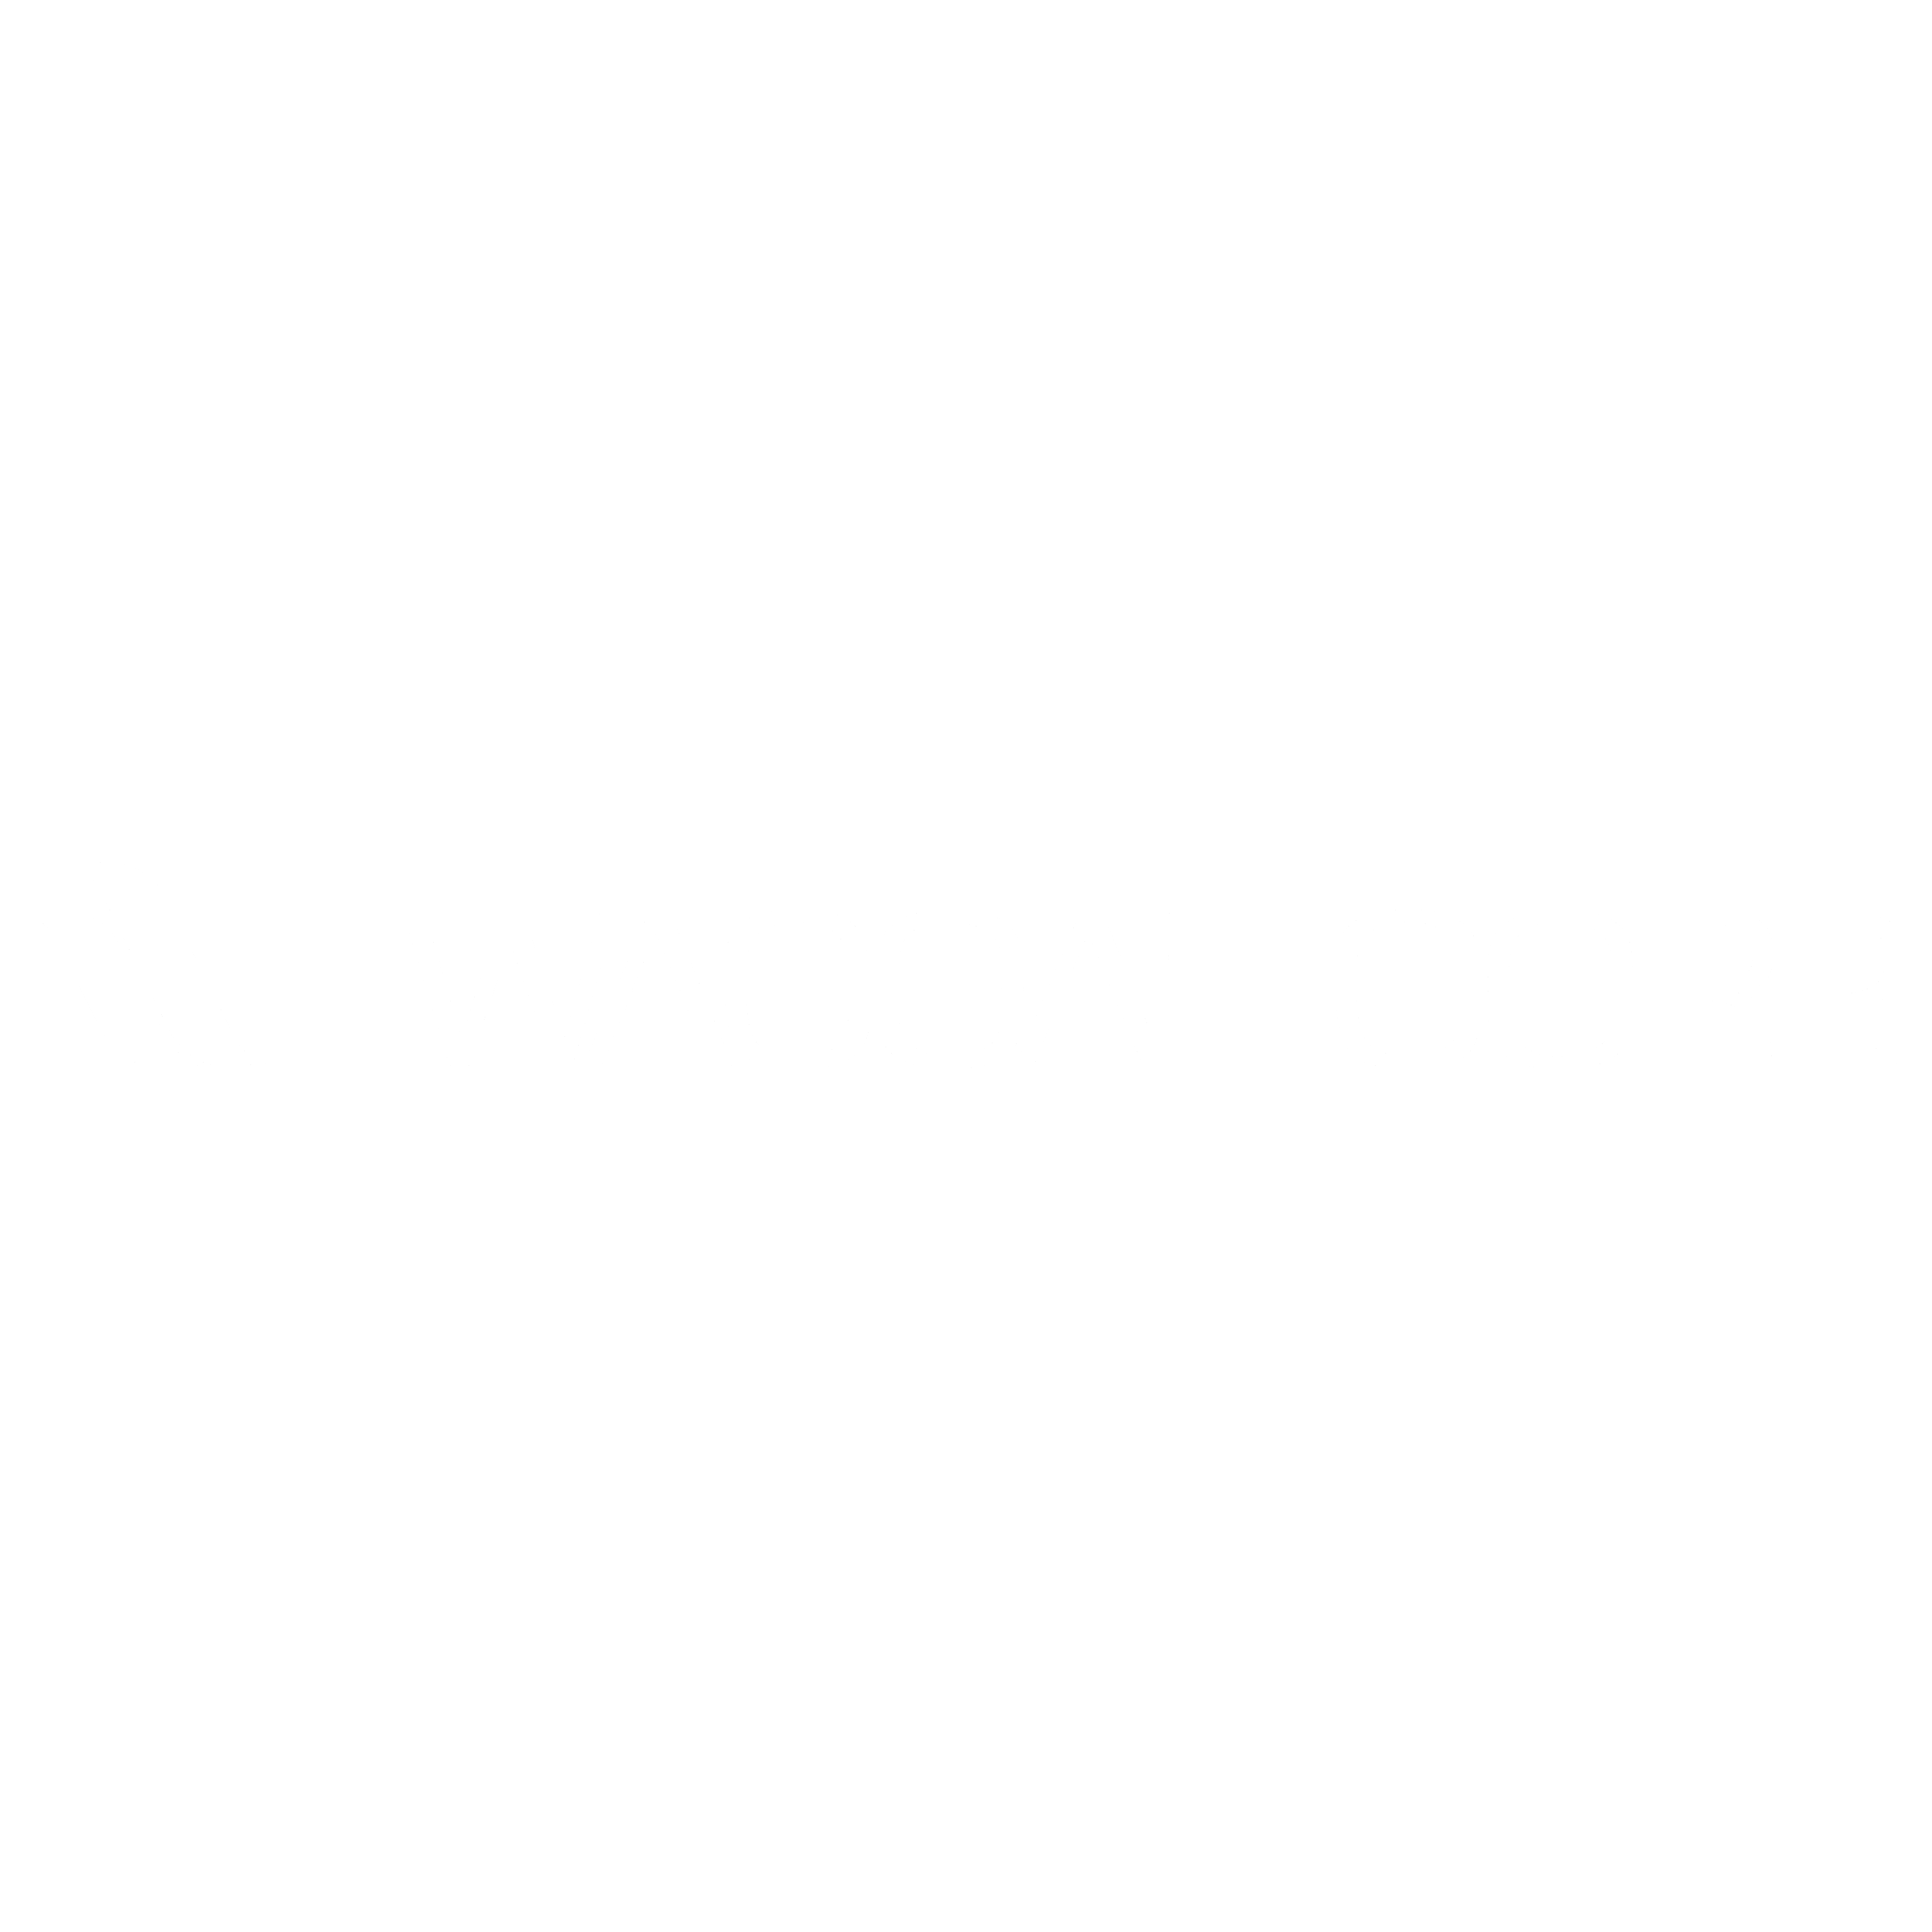 Wacoal Logo - Wacoal Logo PNG Transparent & SVG Vector - Freebie Supply